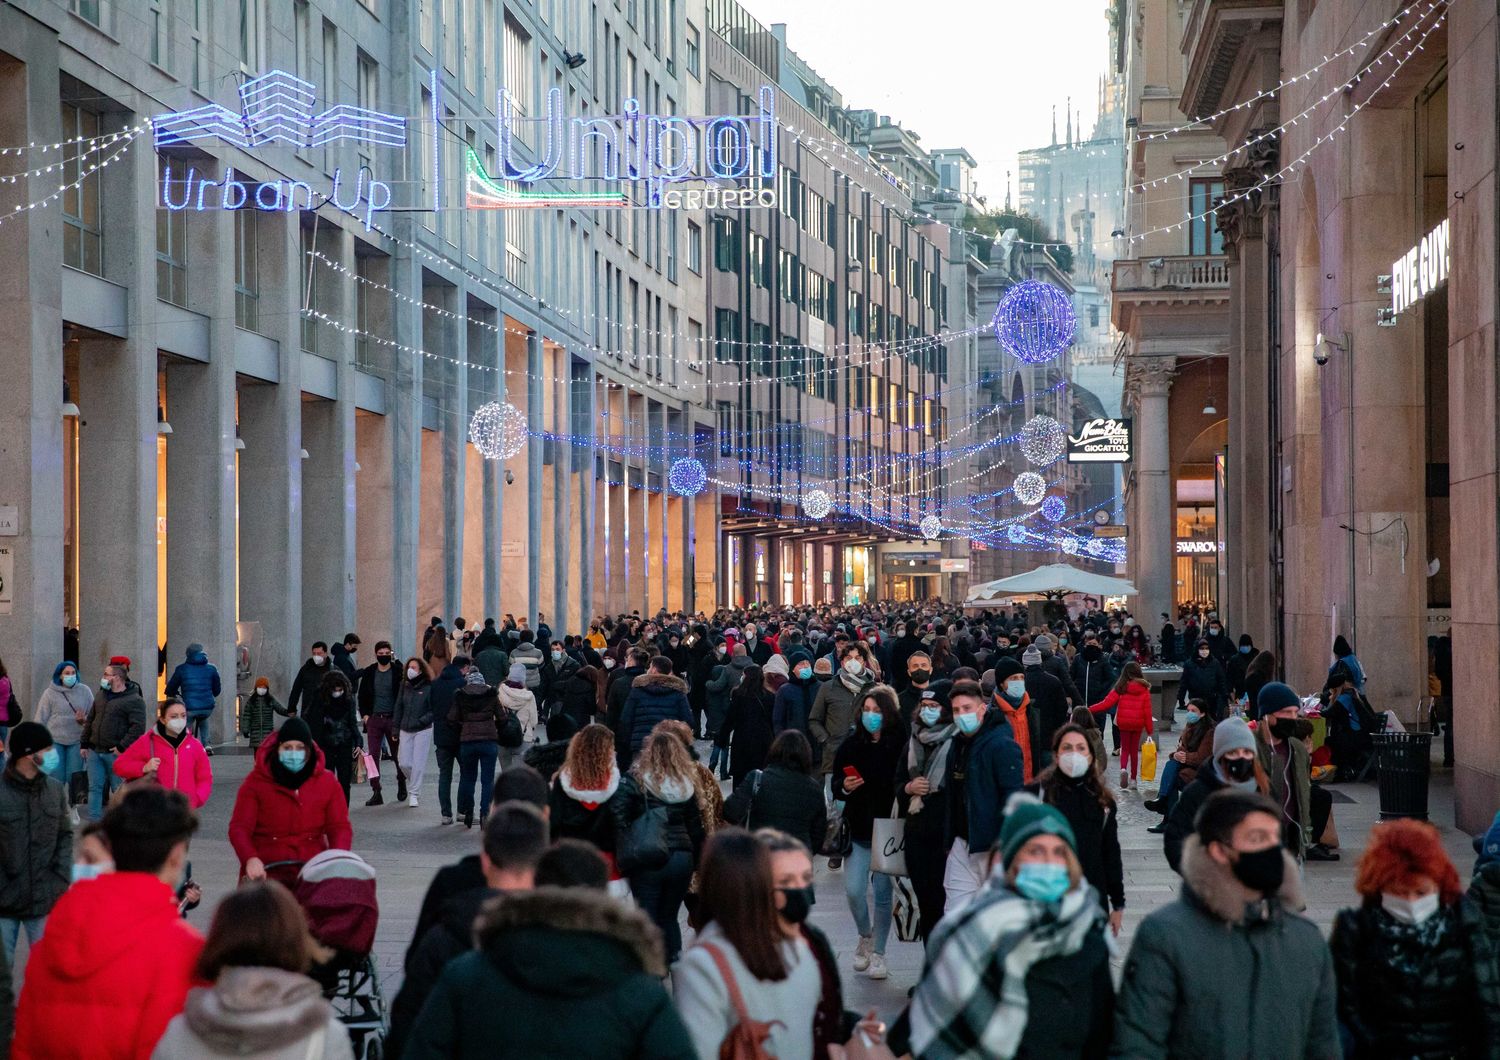 Folla nelle strade dello shopping a Milano